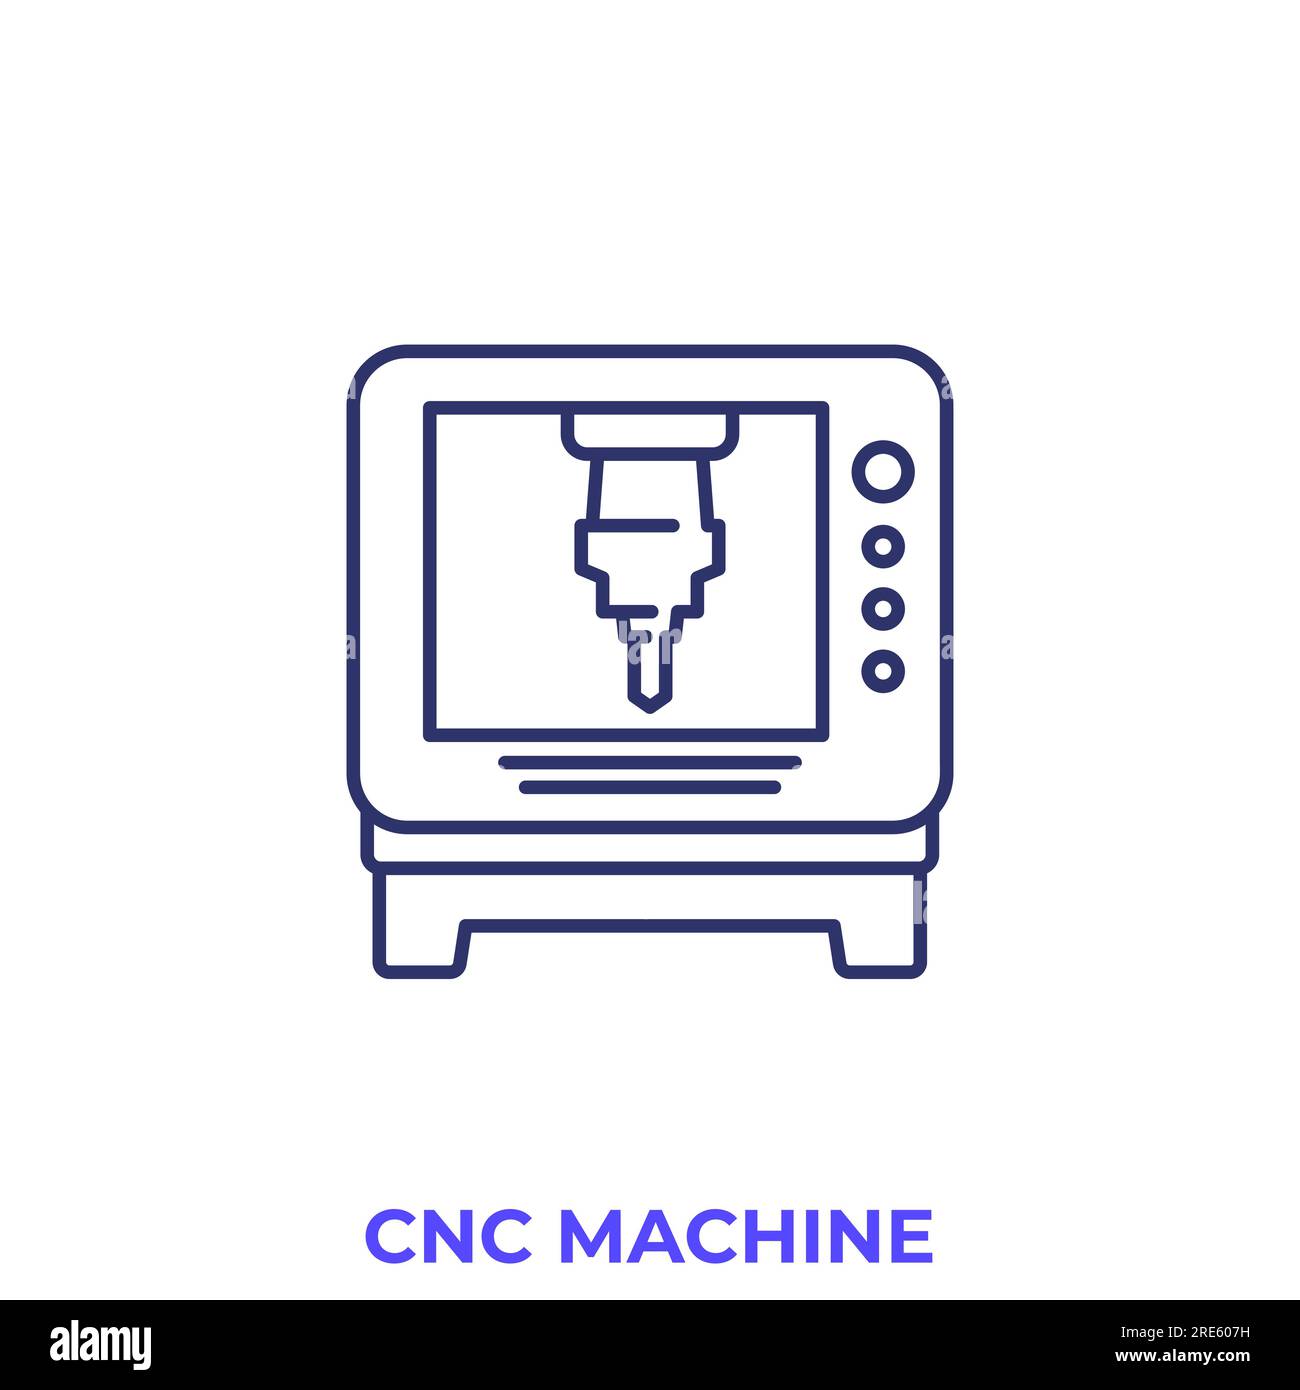 CNC machine icon, line vector Stock Vector